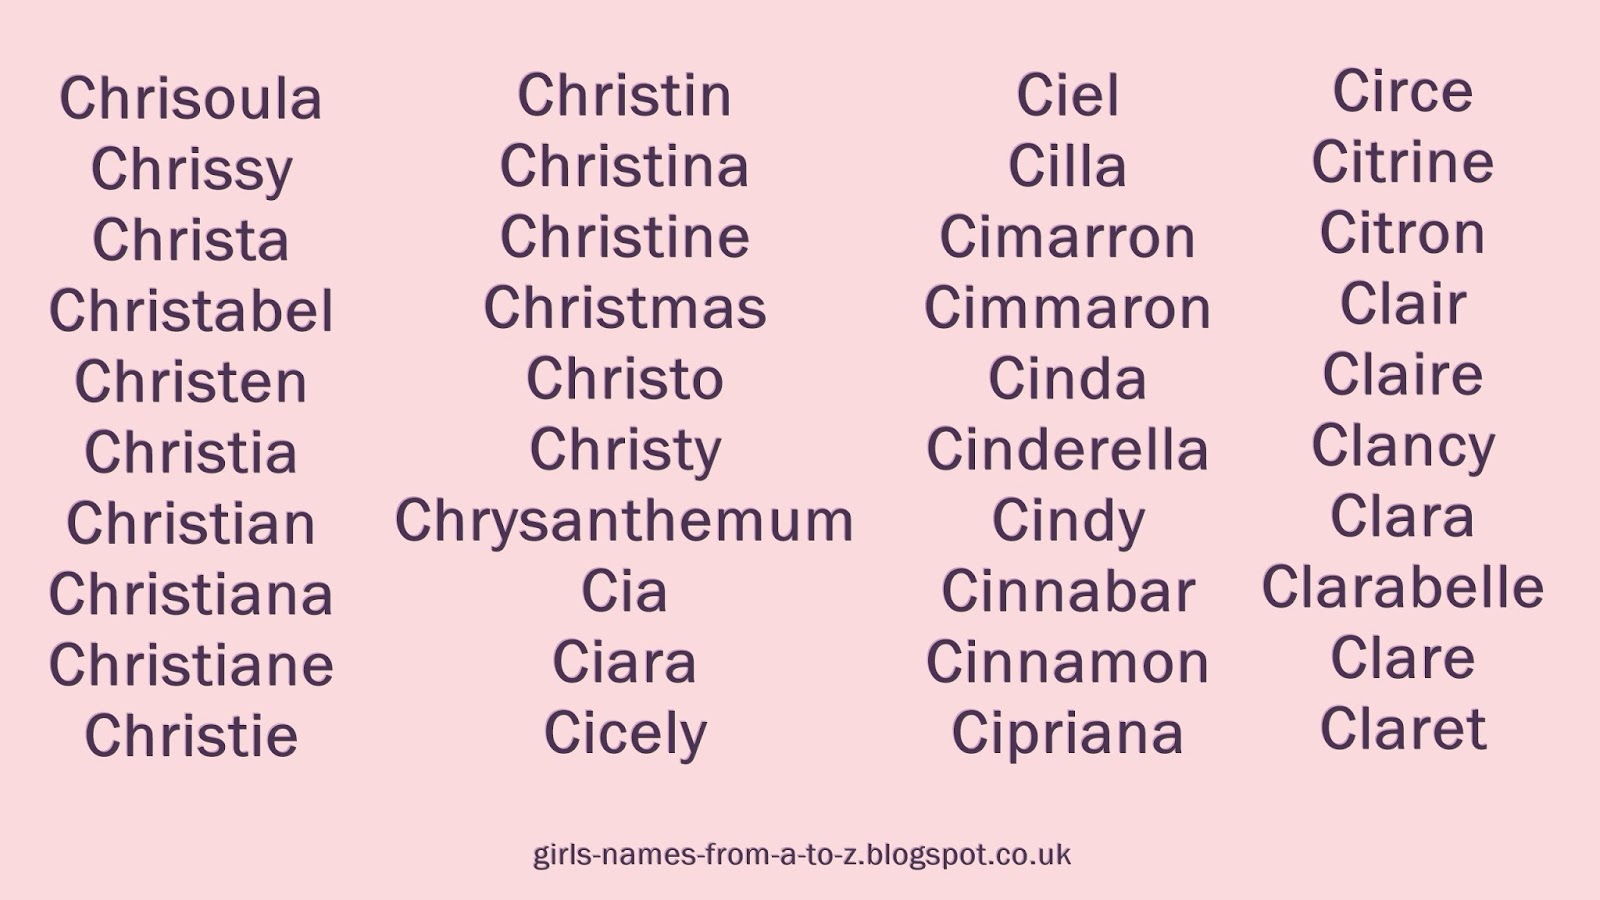 Ruang Belajar Siswa Kelas 2 Baby Girl Names That Start With C